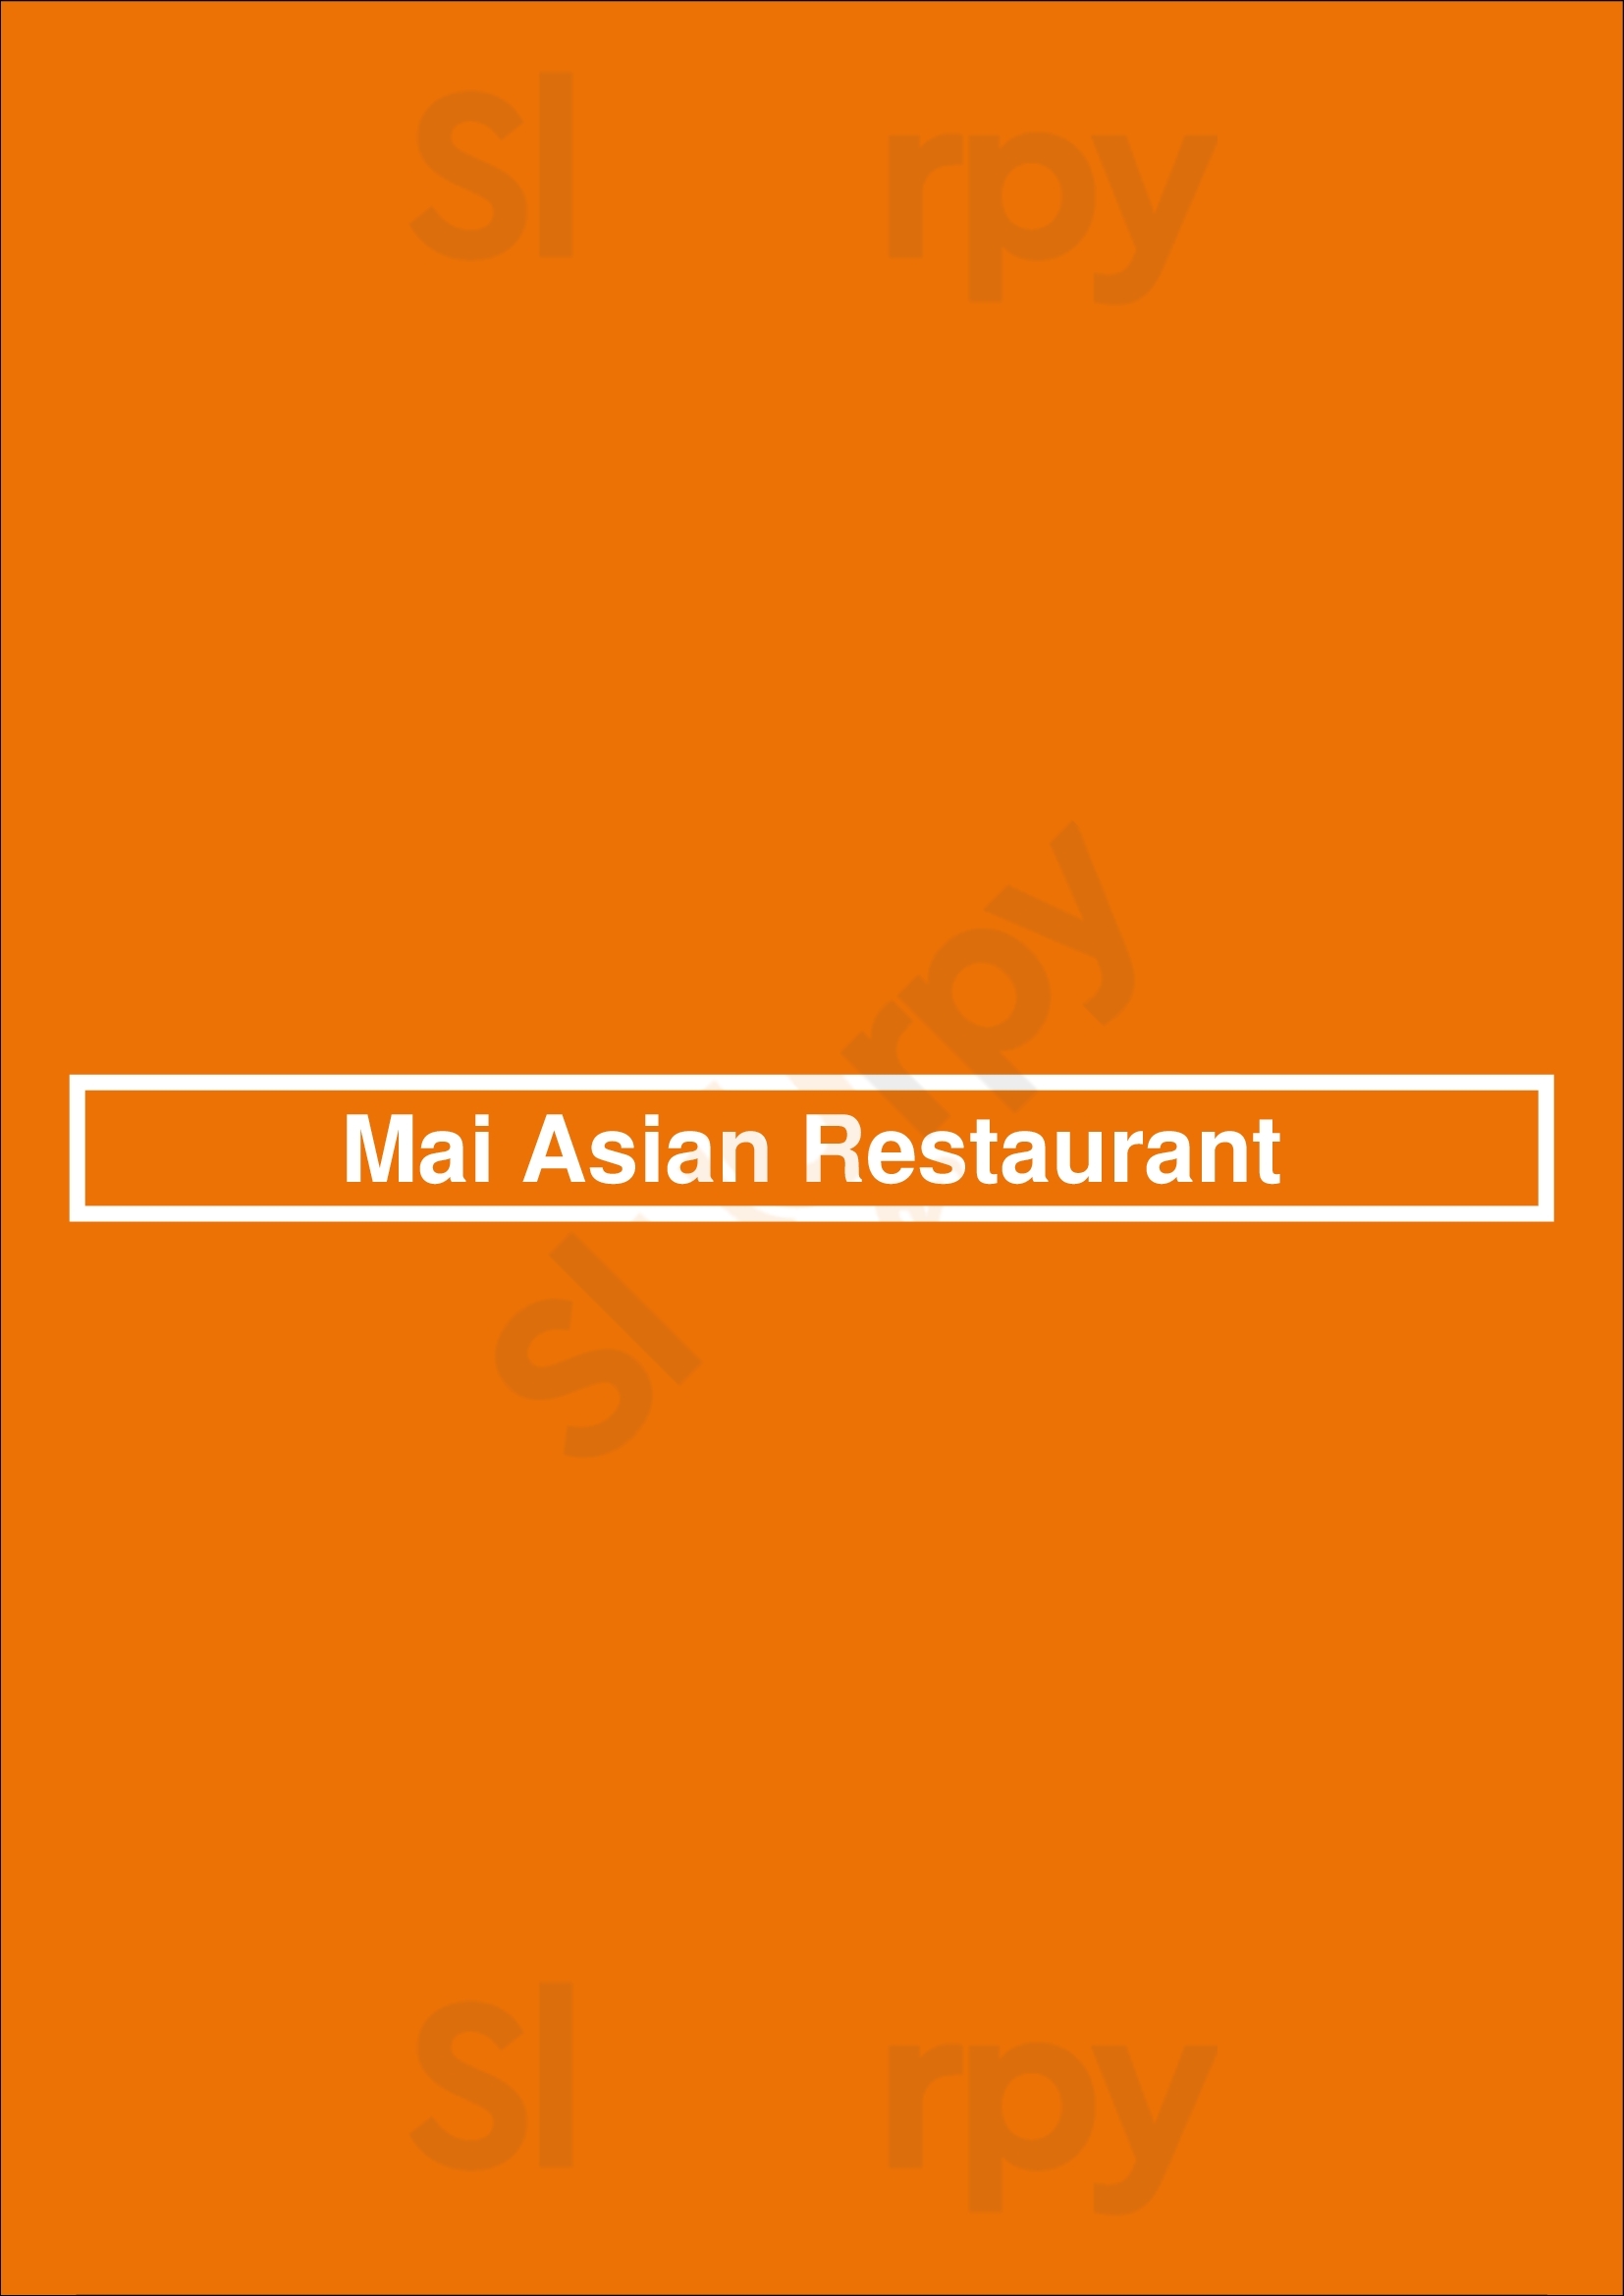 Mai Asian Restaurant Moncton Menu - 1